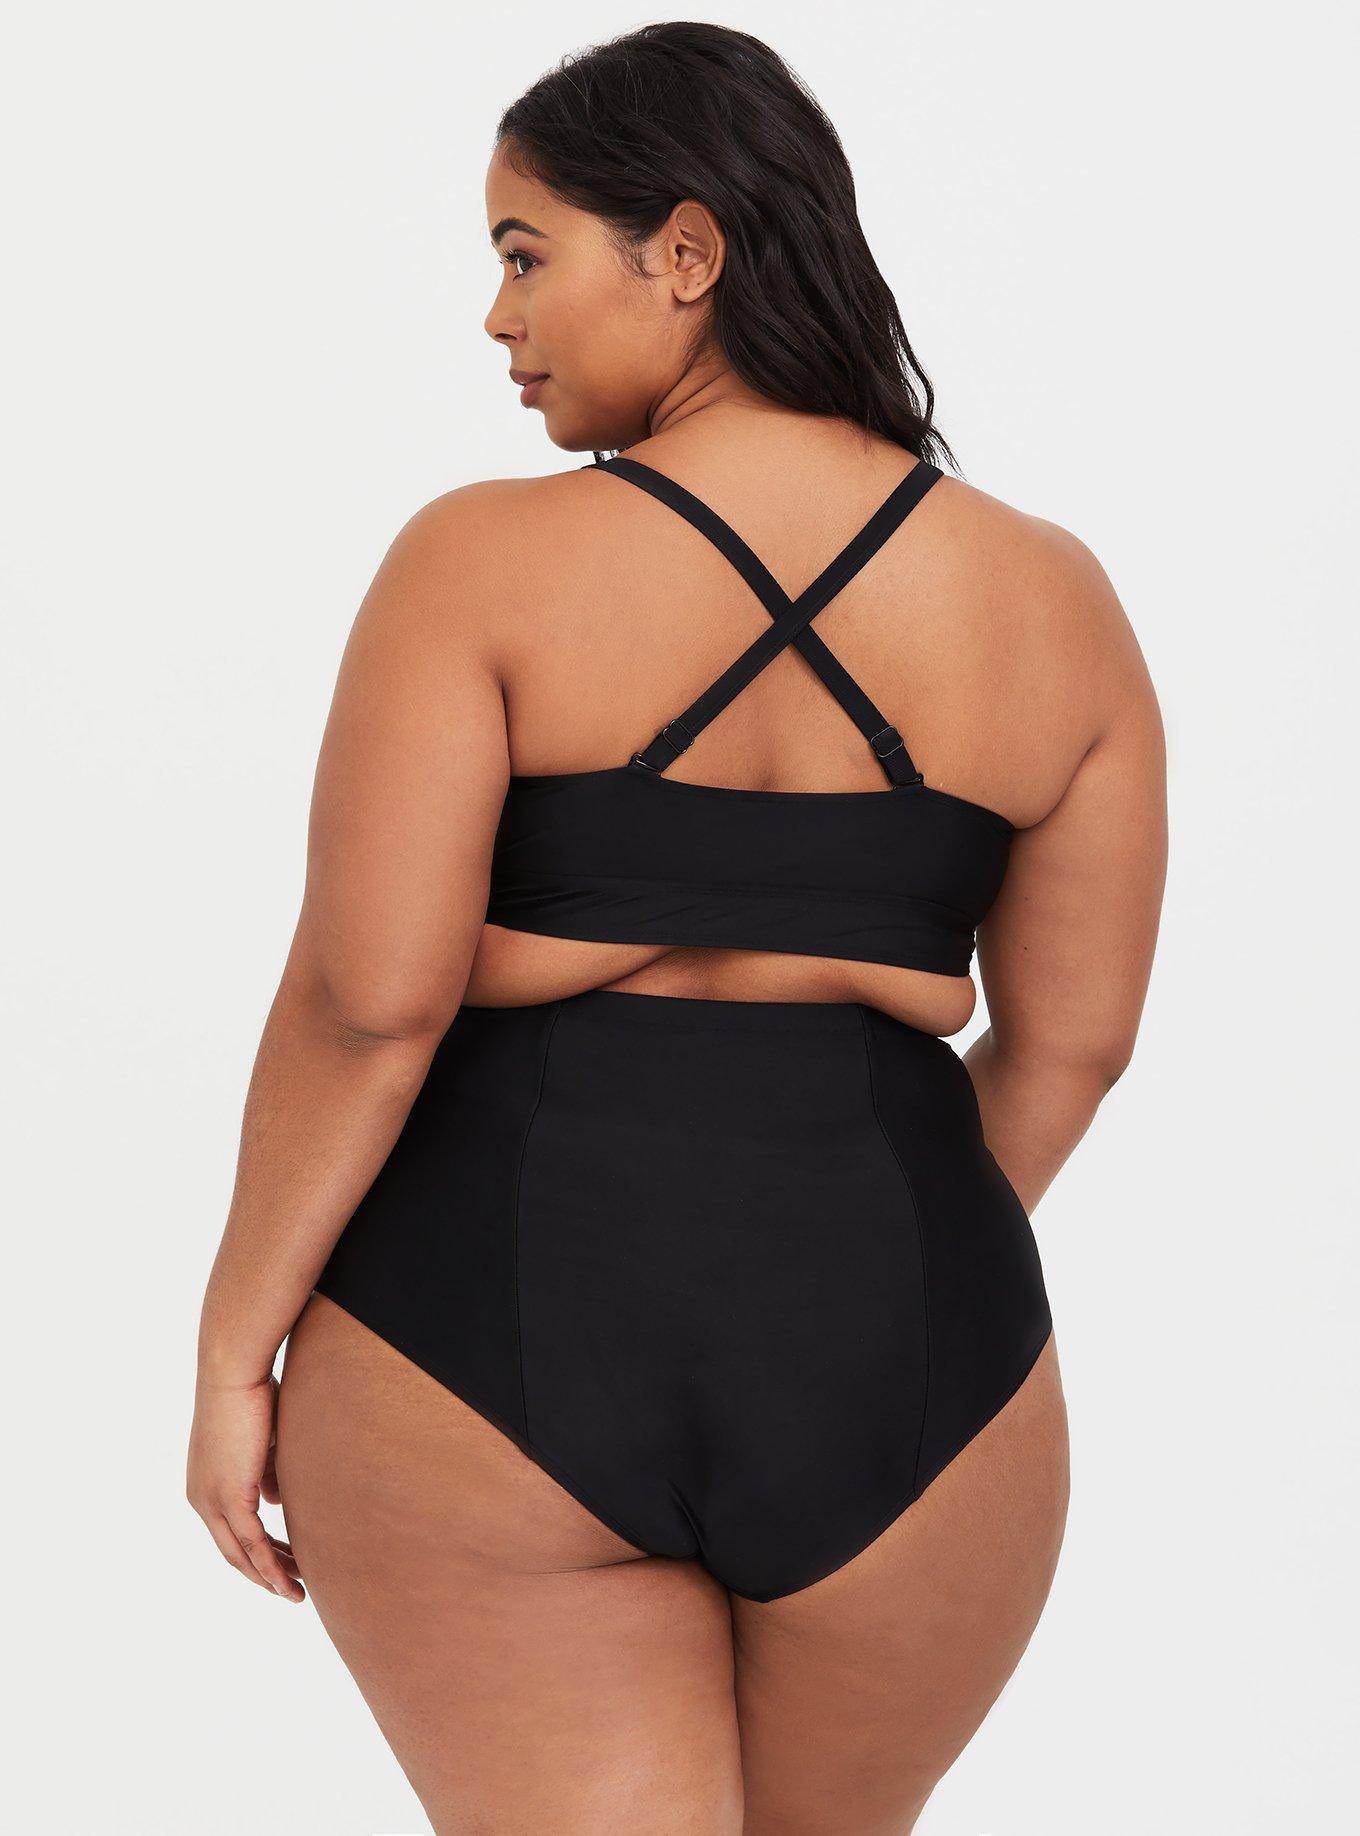 Plus Size - Black Lace Push-Up Strapless One-Piece Swimsuit - Torrid